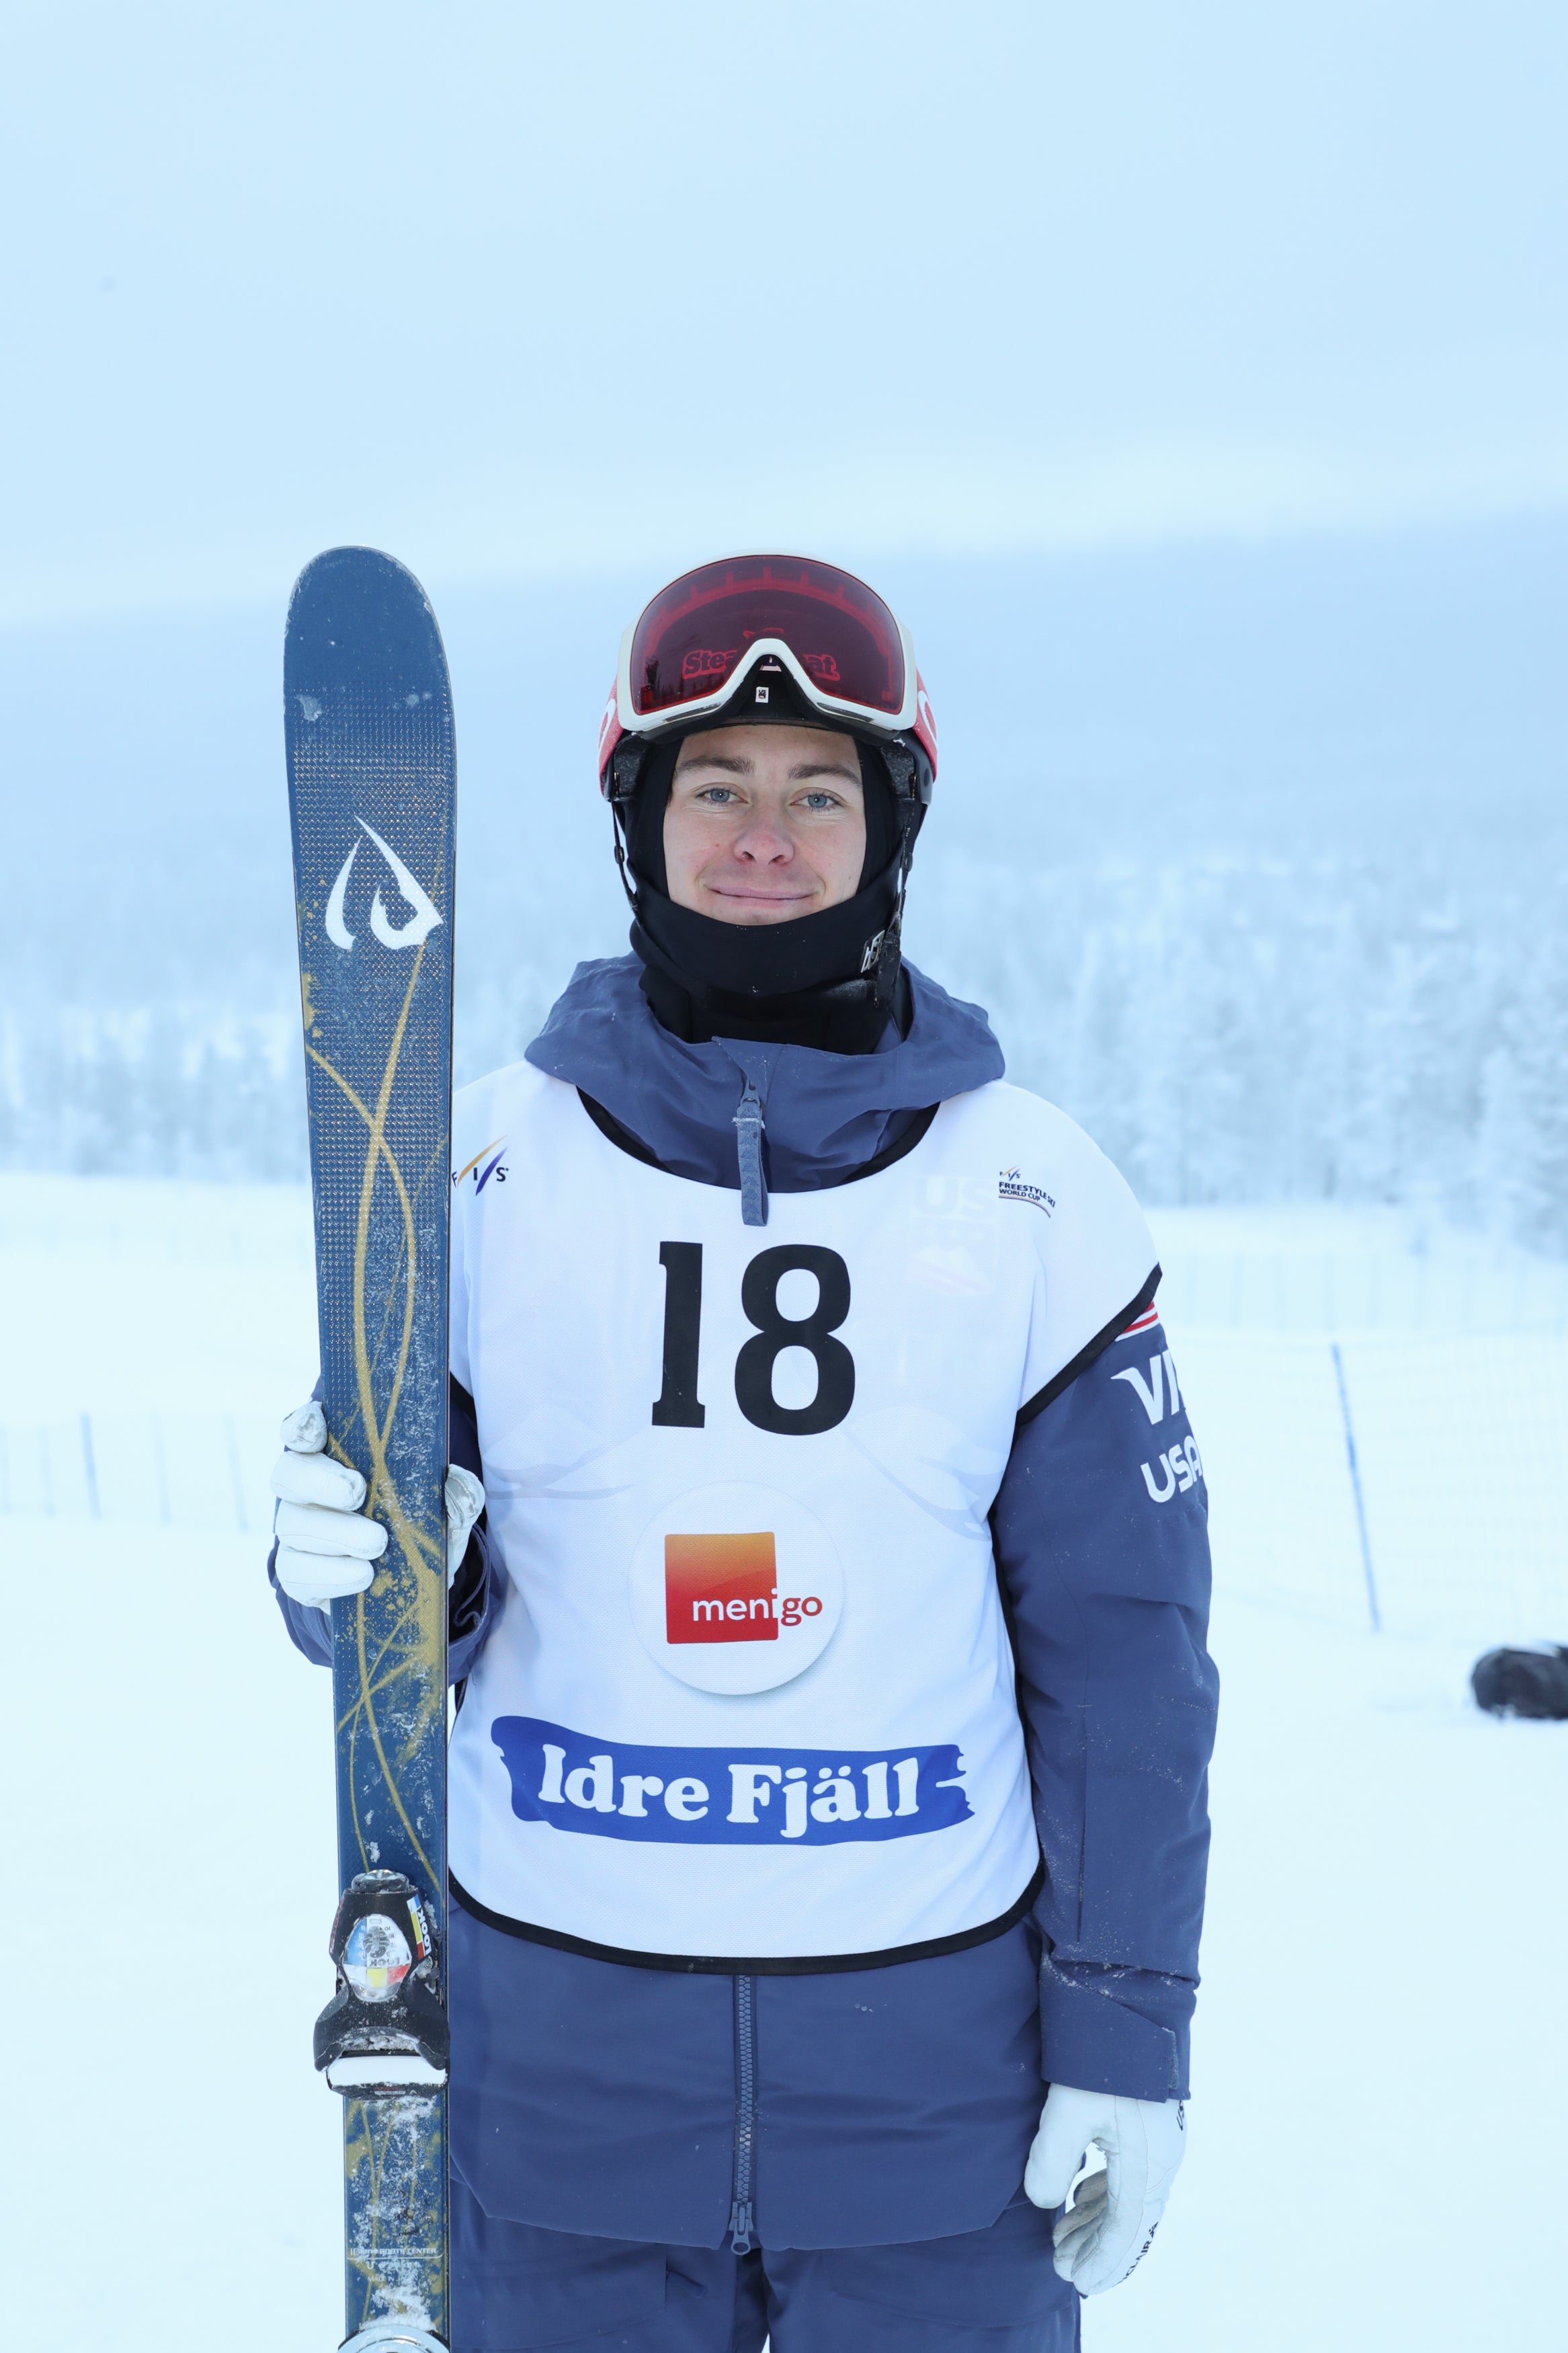 Photo of Landon Wendler - Mogul Skier